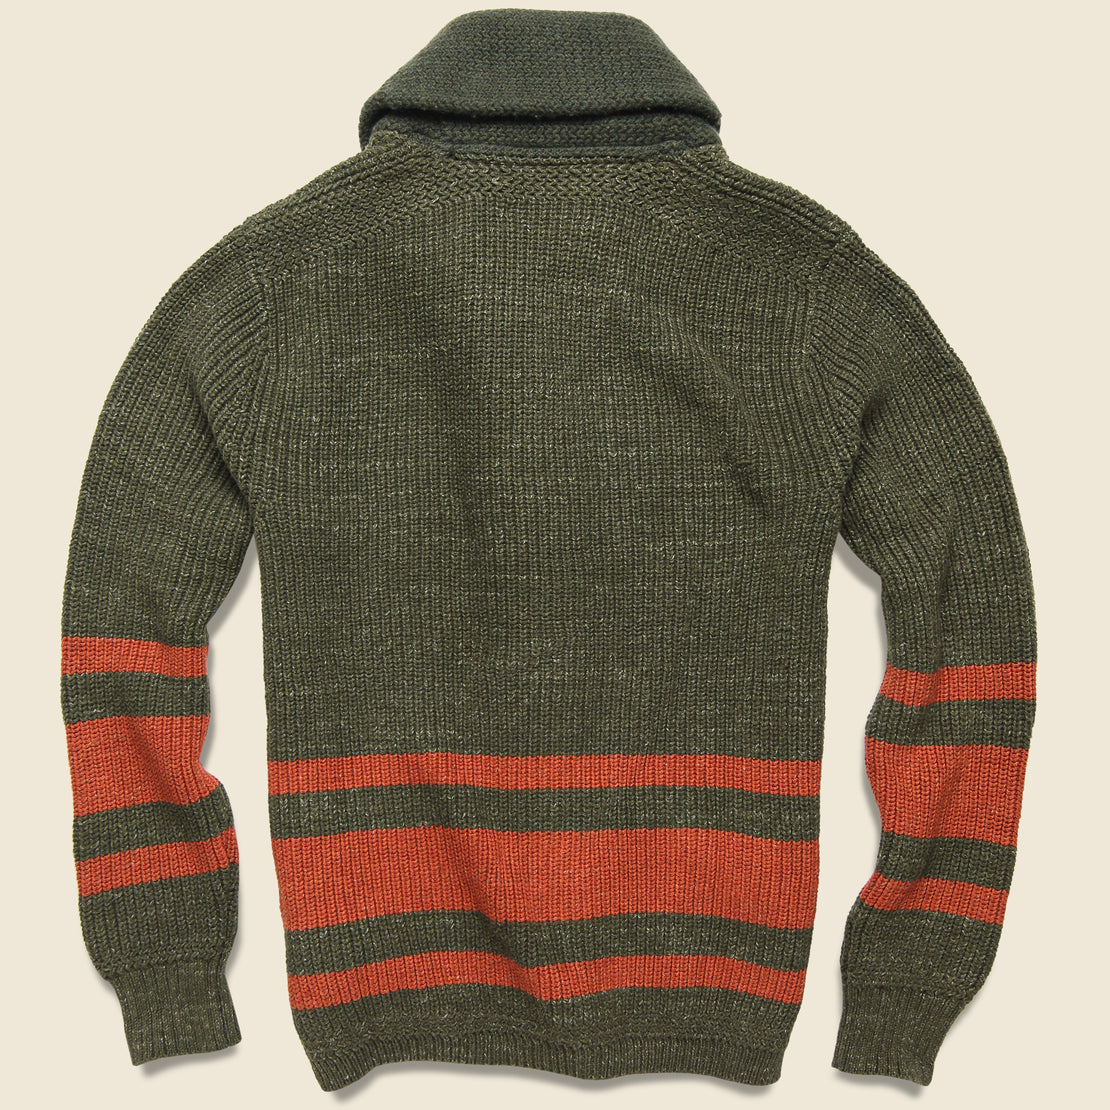 Shawl Collar Cardigan - Olive Drab/Orange - RRL - STAG Provisions - Tops - Sweater